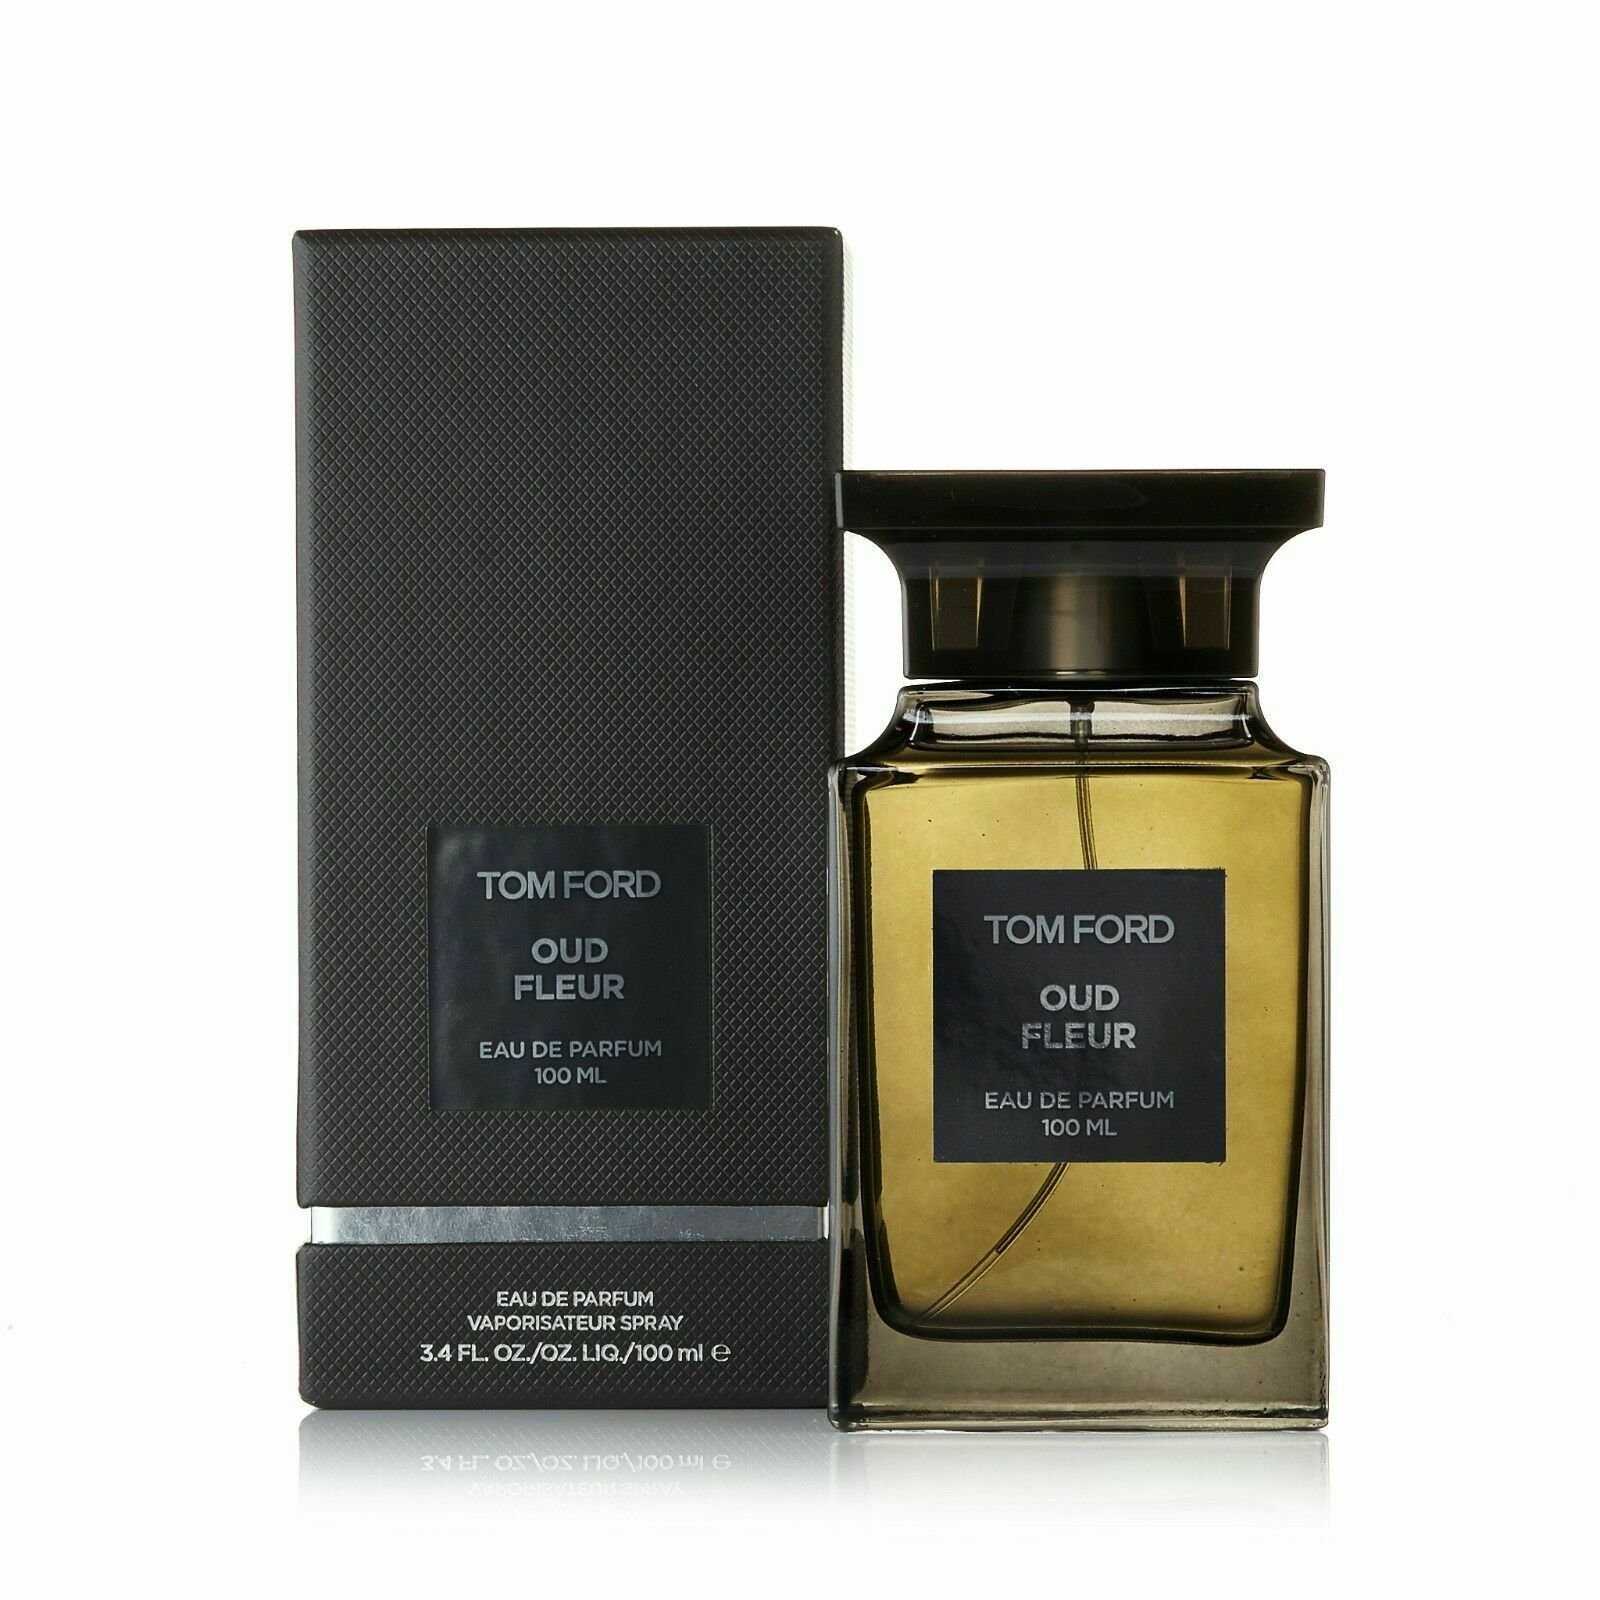 Planet Perfume - Tom Ford Oud Fleur : Super Deals